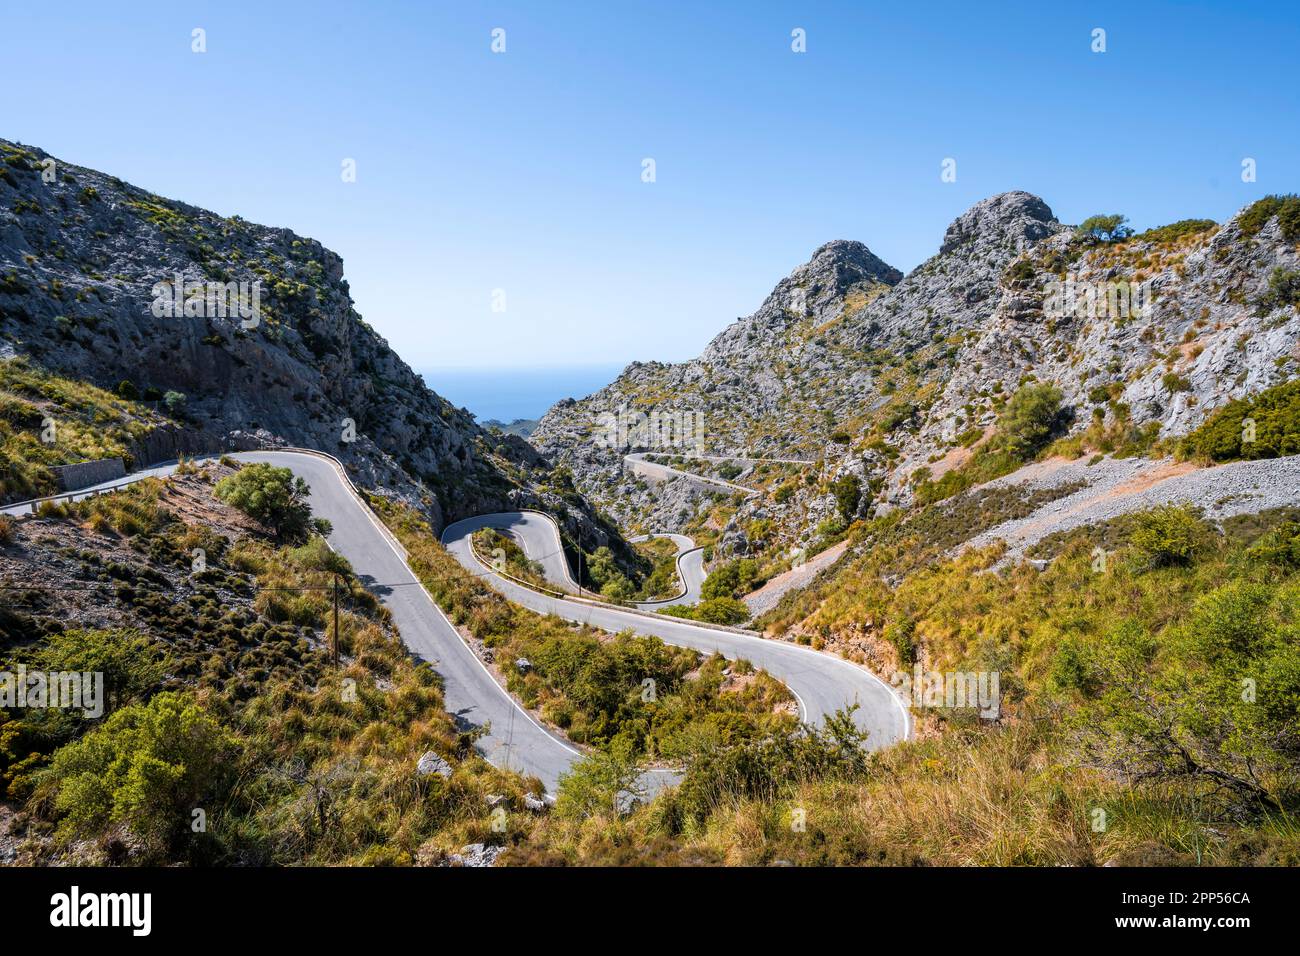 Bergpass mit Serpentinen nach Sa Colobra, Serra de Tramuntana, Mallorca, Balearen, Spanien Stockfoto